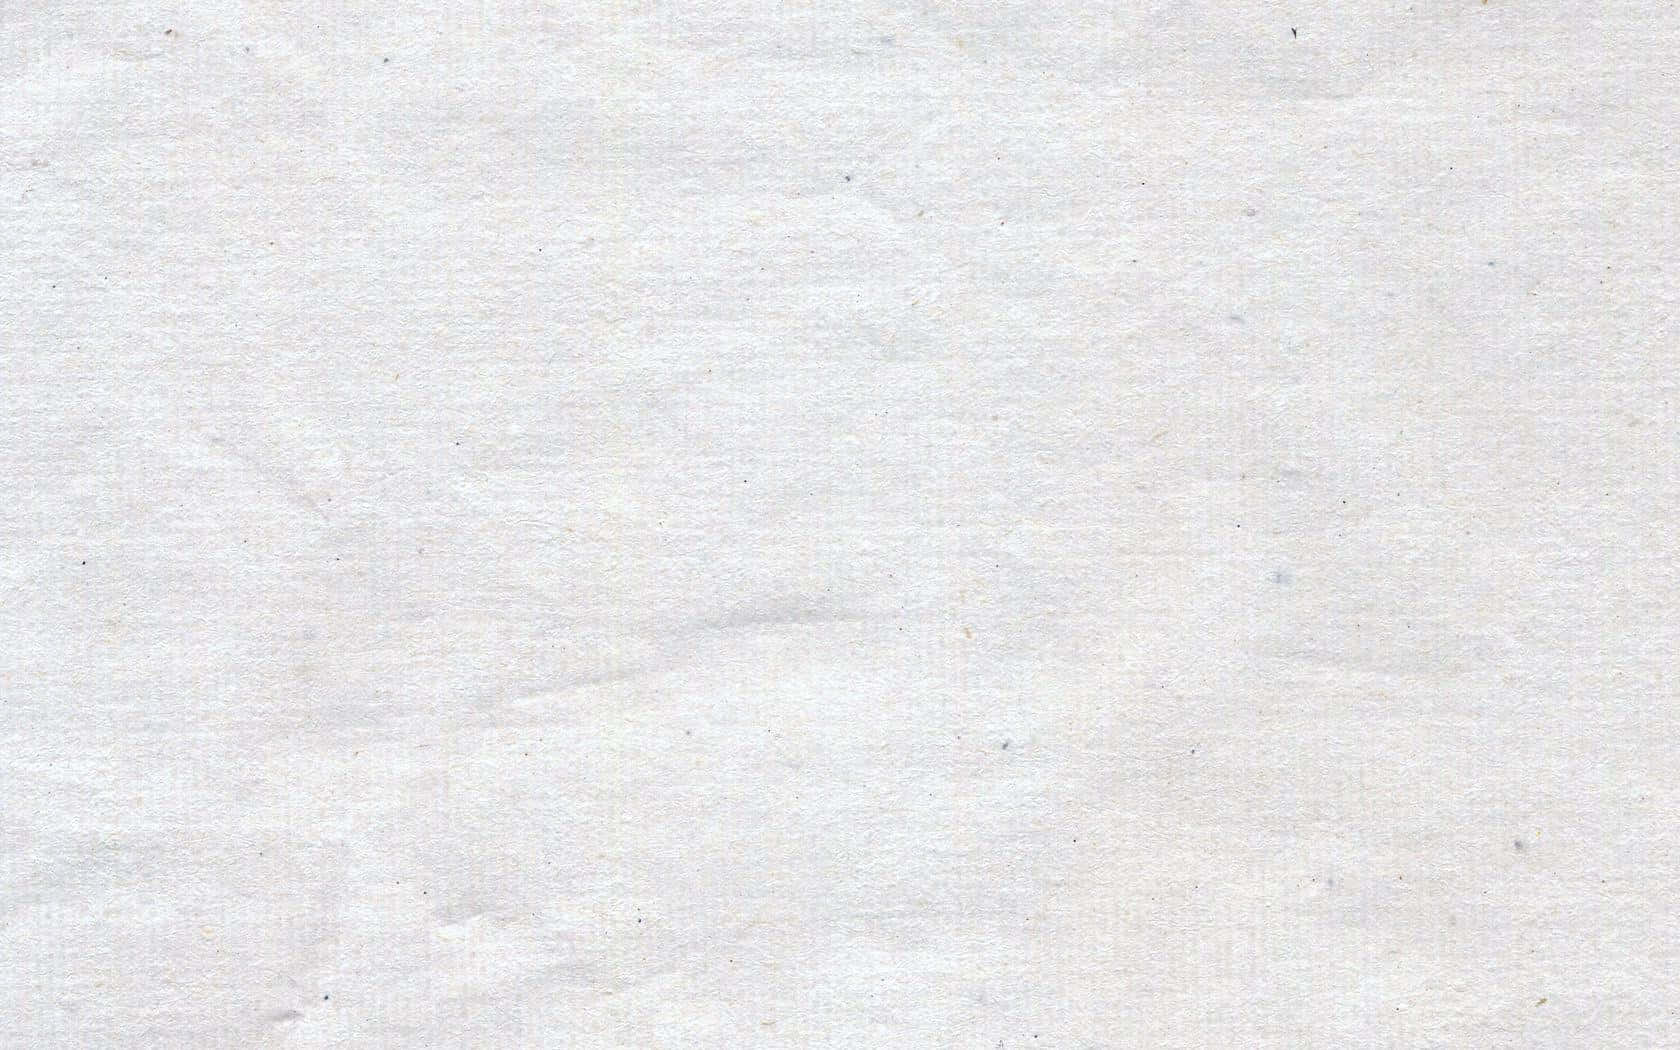 Immaginidi Carta Bianca Texture.